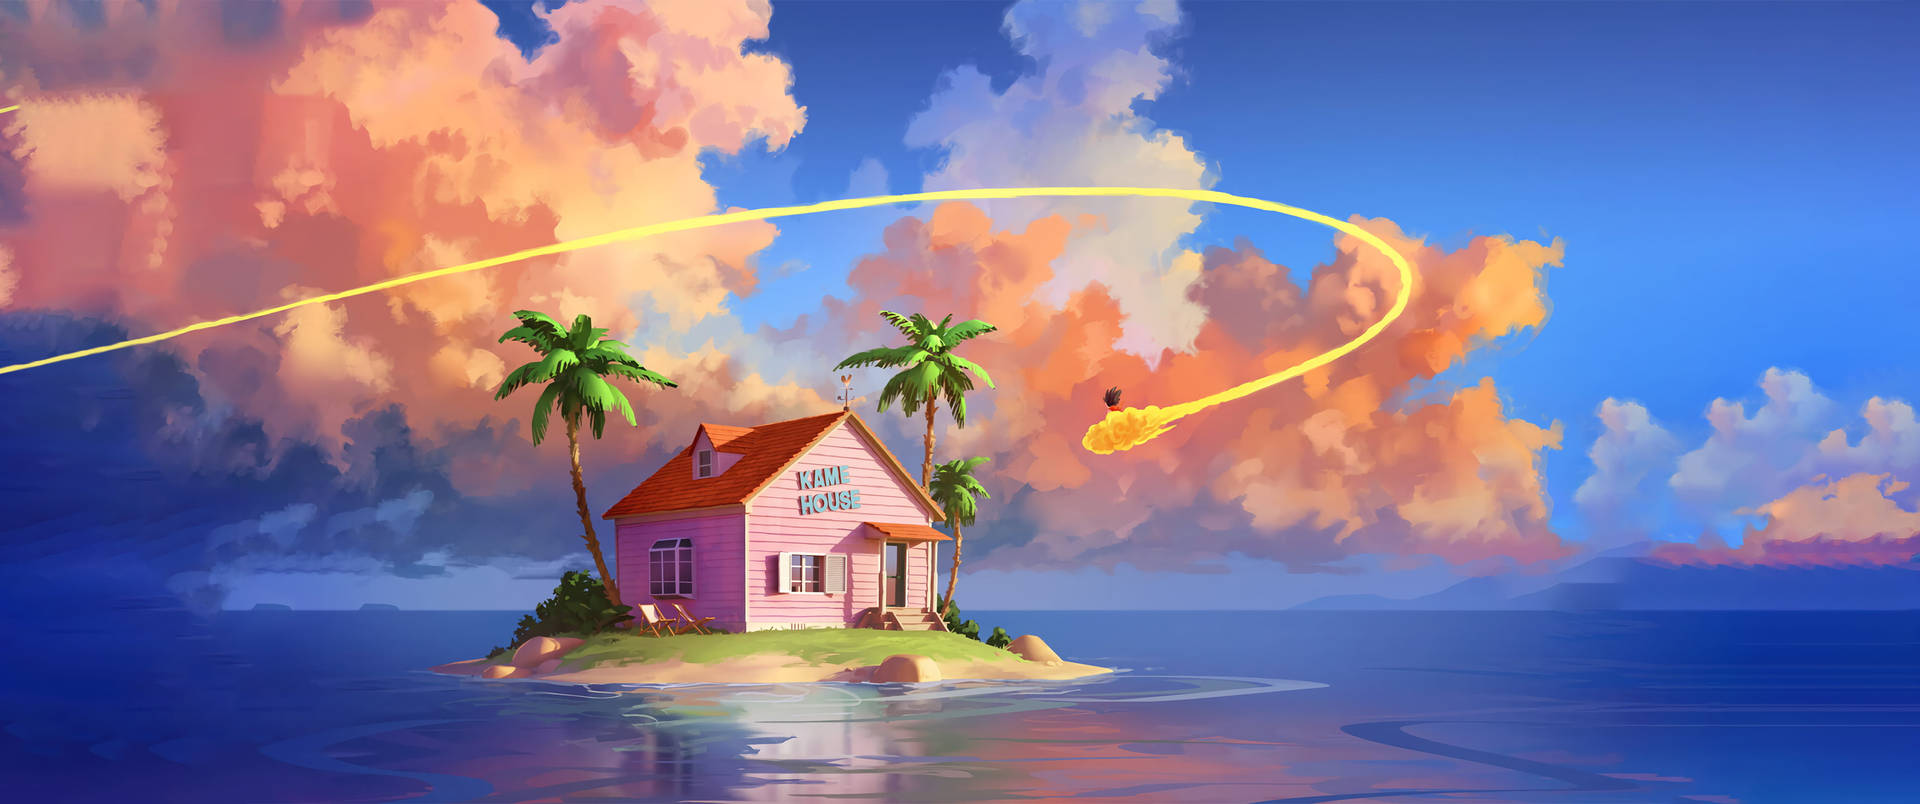 cartoon island background